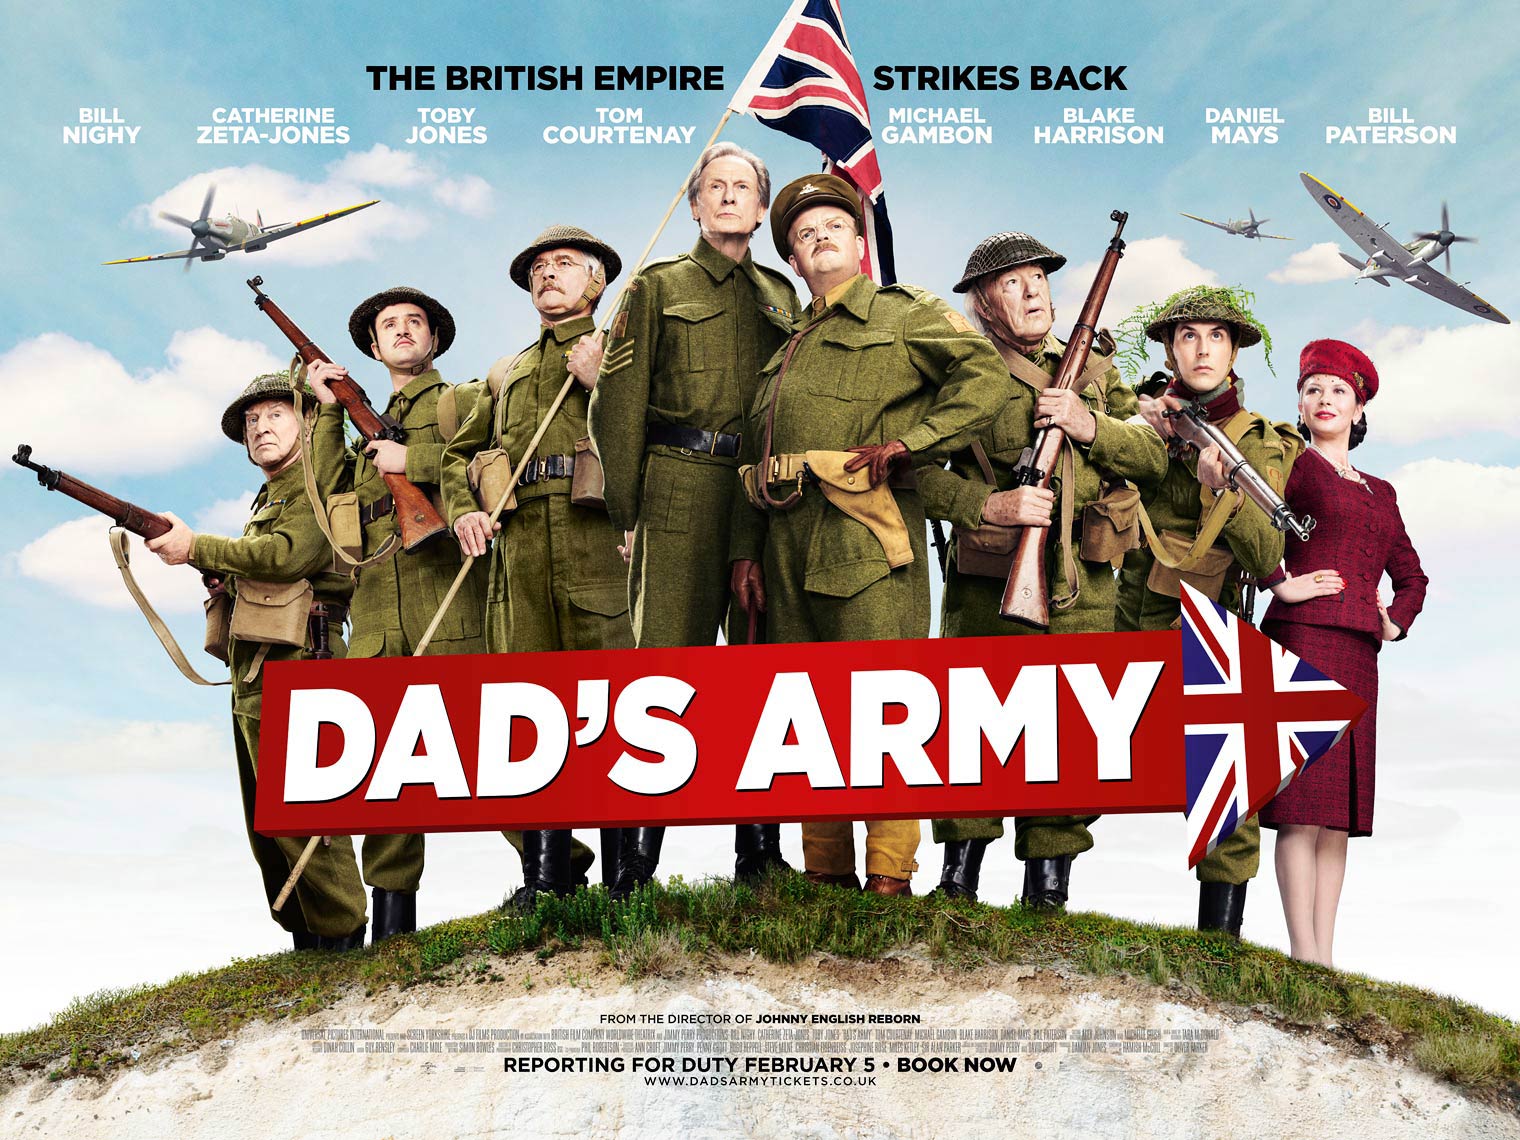 Dads Army film poster key art